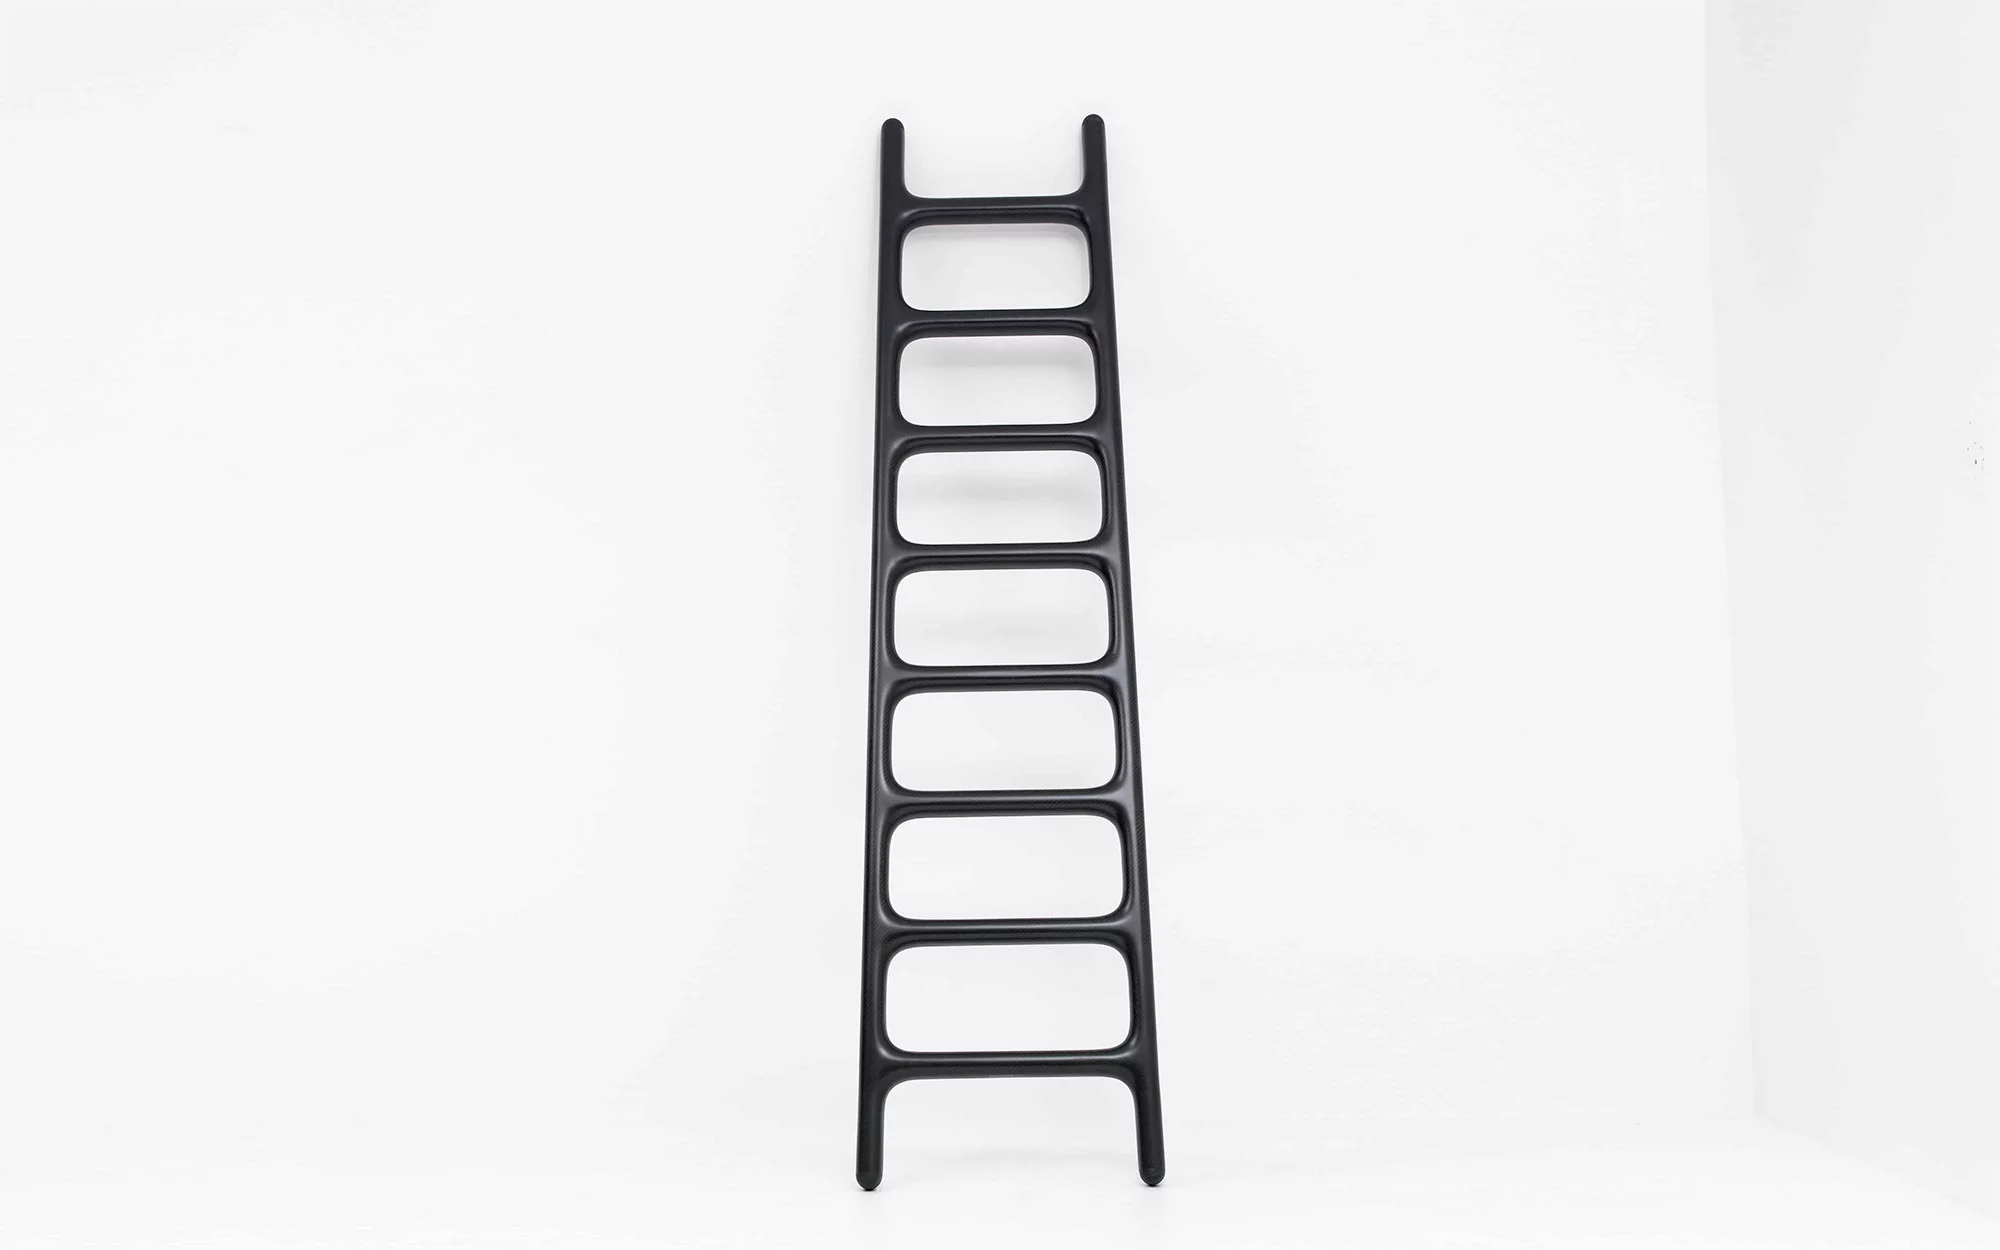 Carbon Ladder - Marc Newson - Seating - Galerie kreo